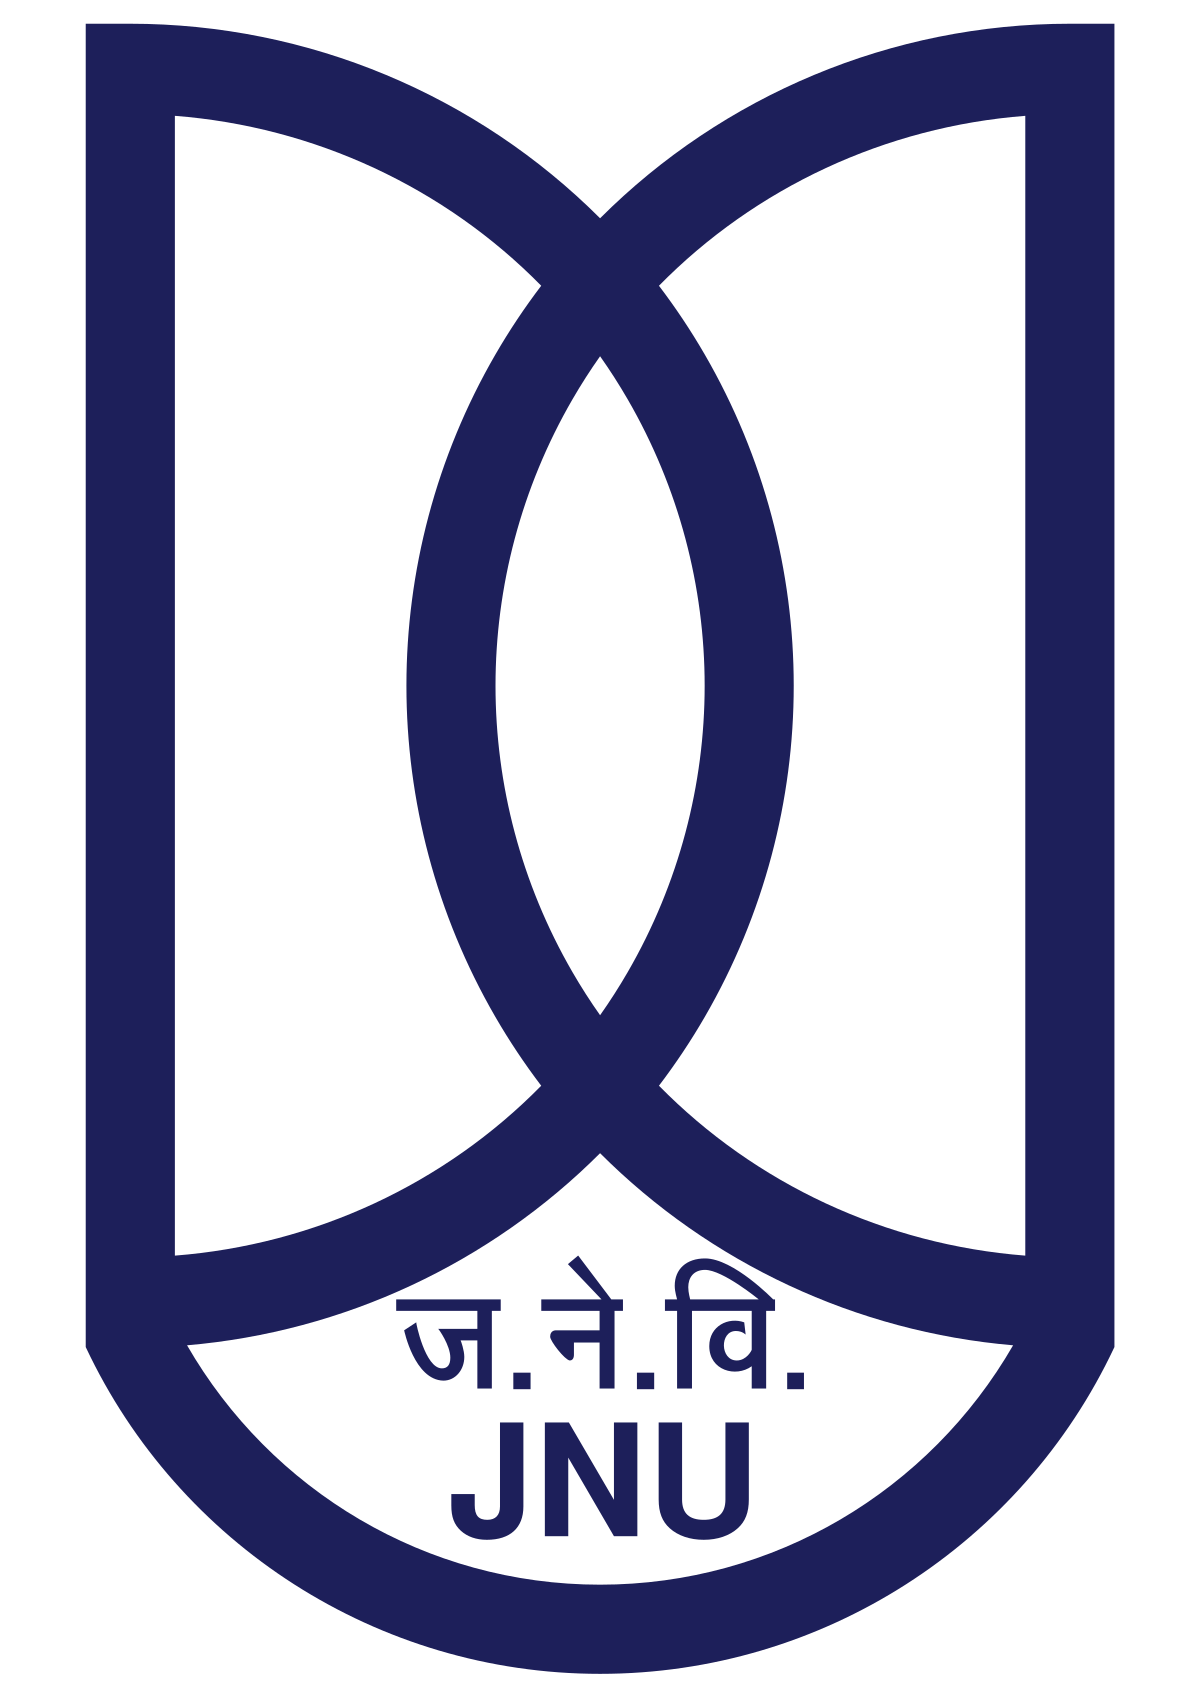  JNU (Jawaharlal Nehru University) Logo